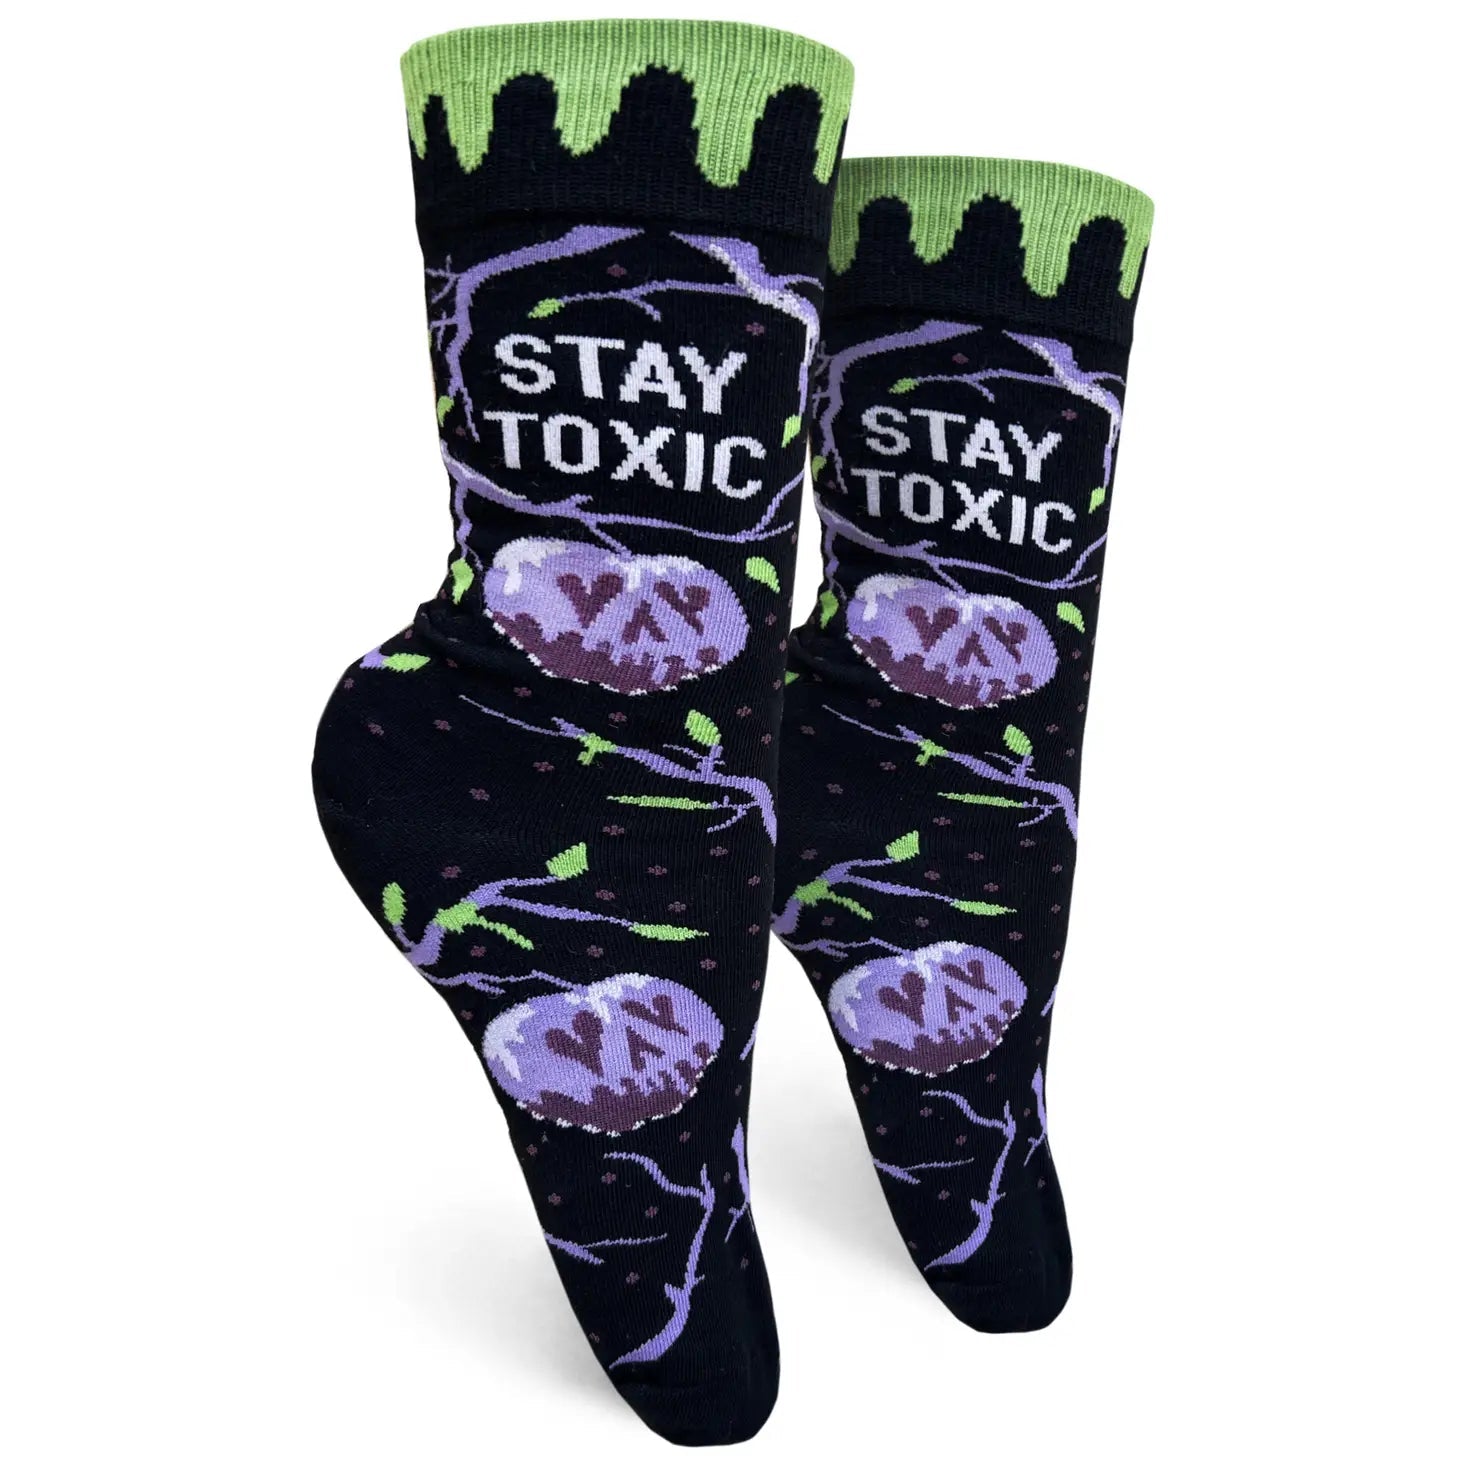 Stay Toxic Women's Crew Socks